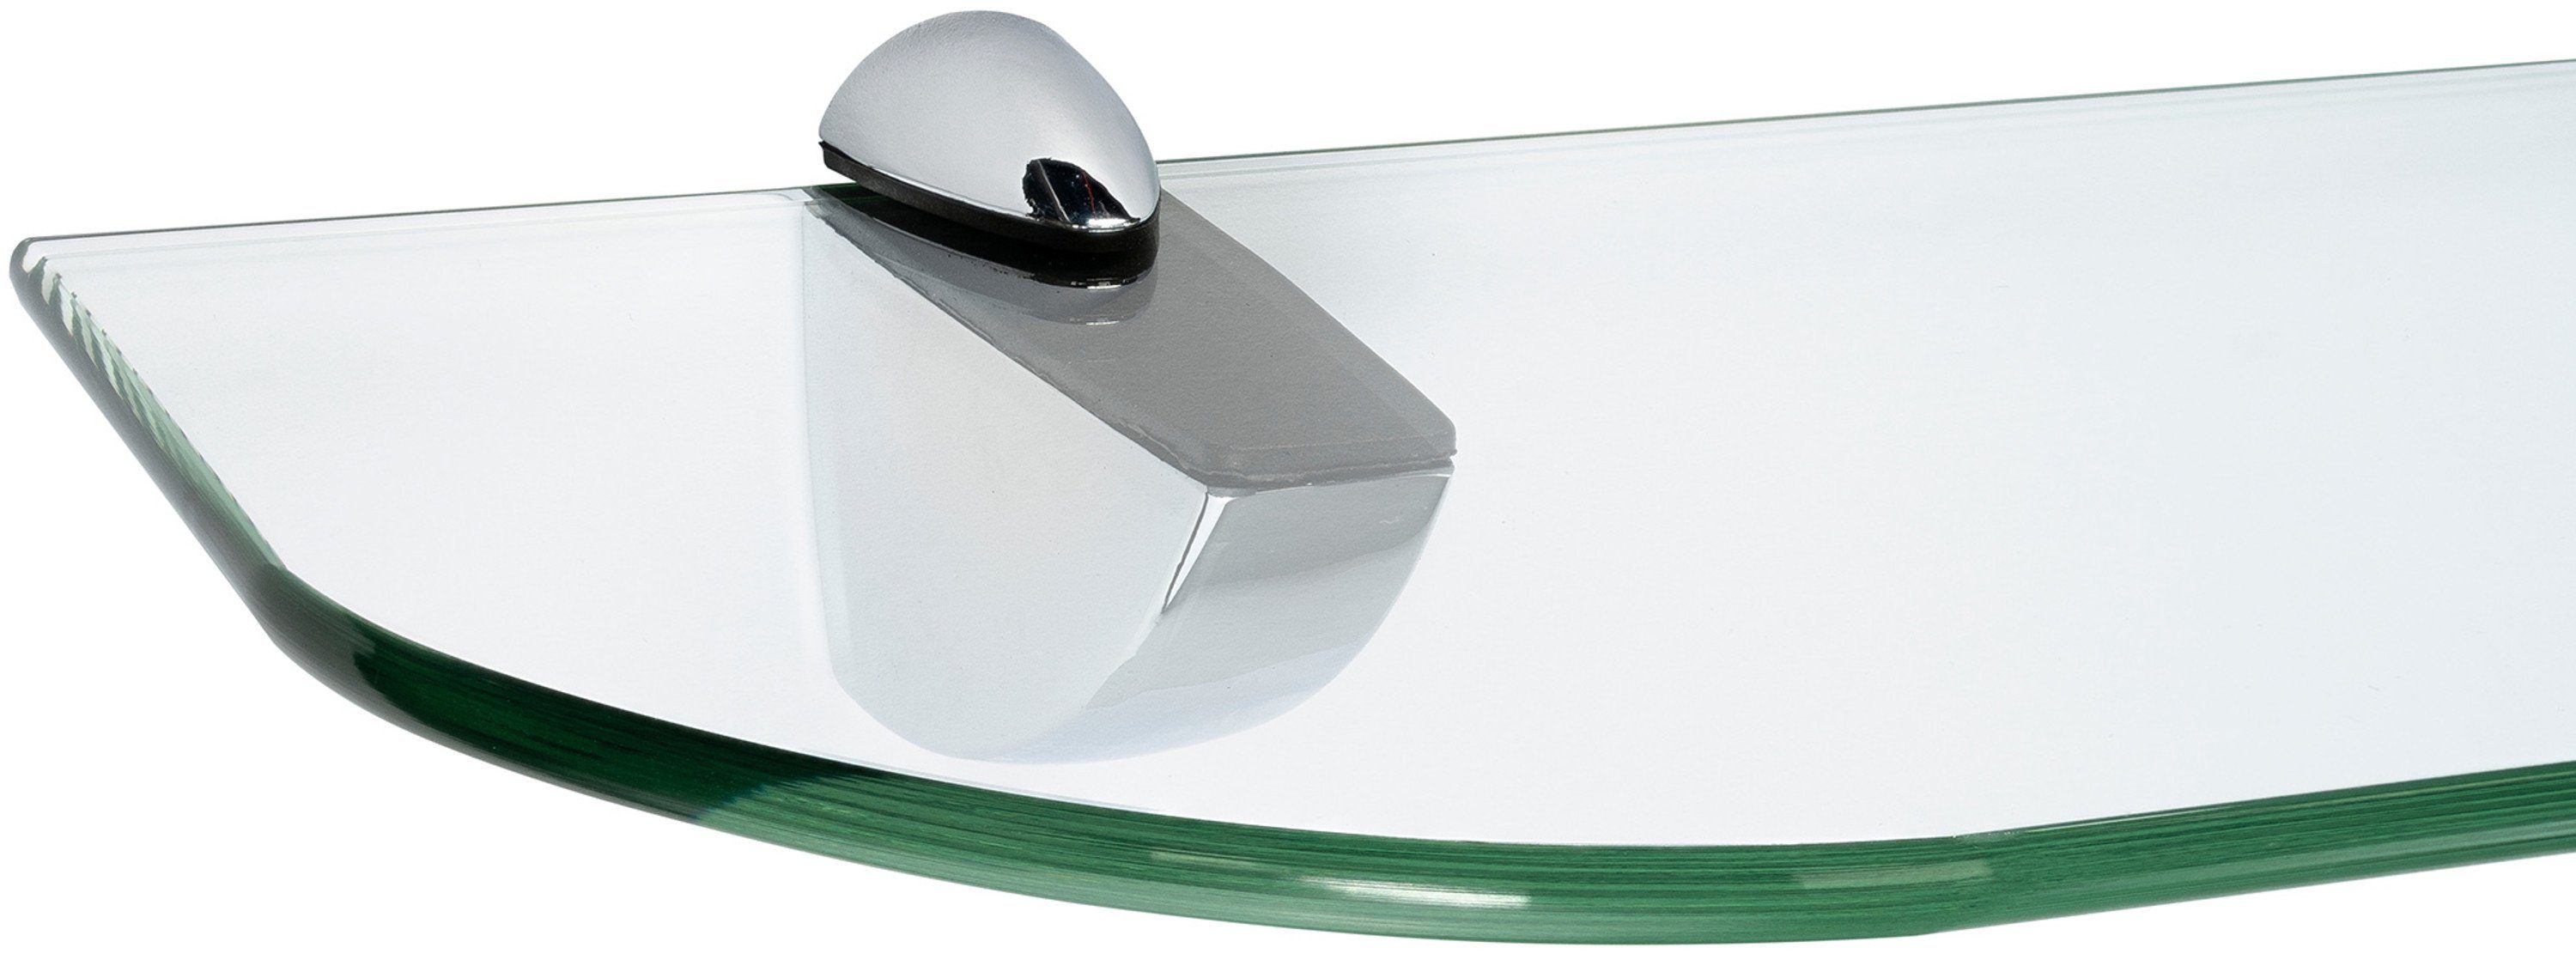 ib style Wandregal Glasregal 6mm klar 60 x 15 cm + Clip PELI Verchromt, Glasboden aus ESG-Sicherheitsglas - Wandregal